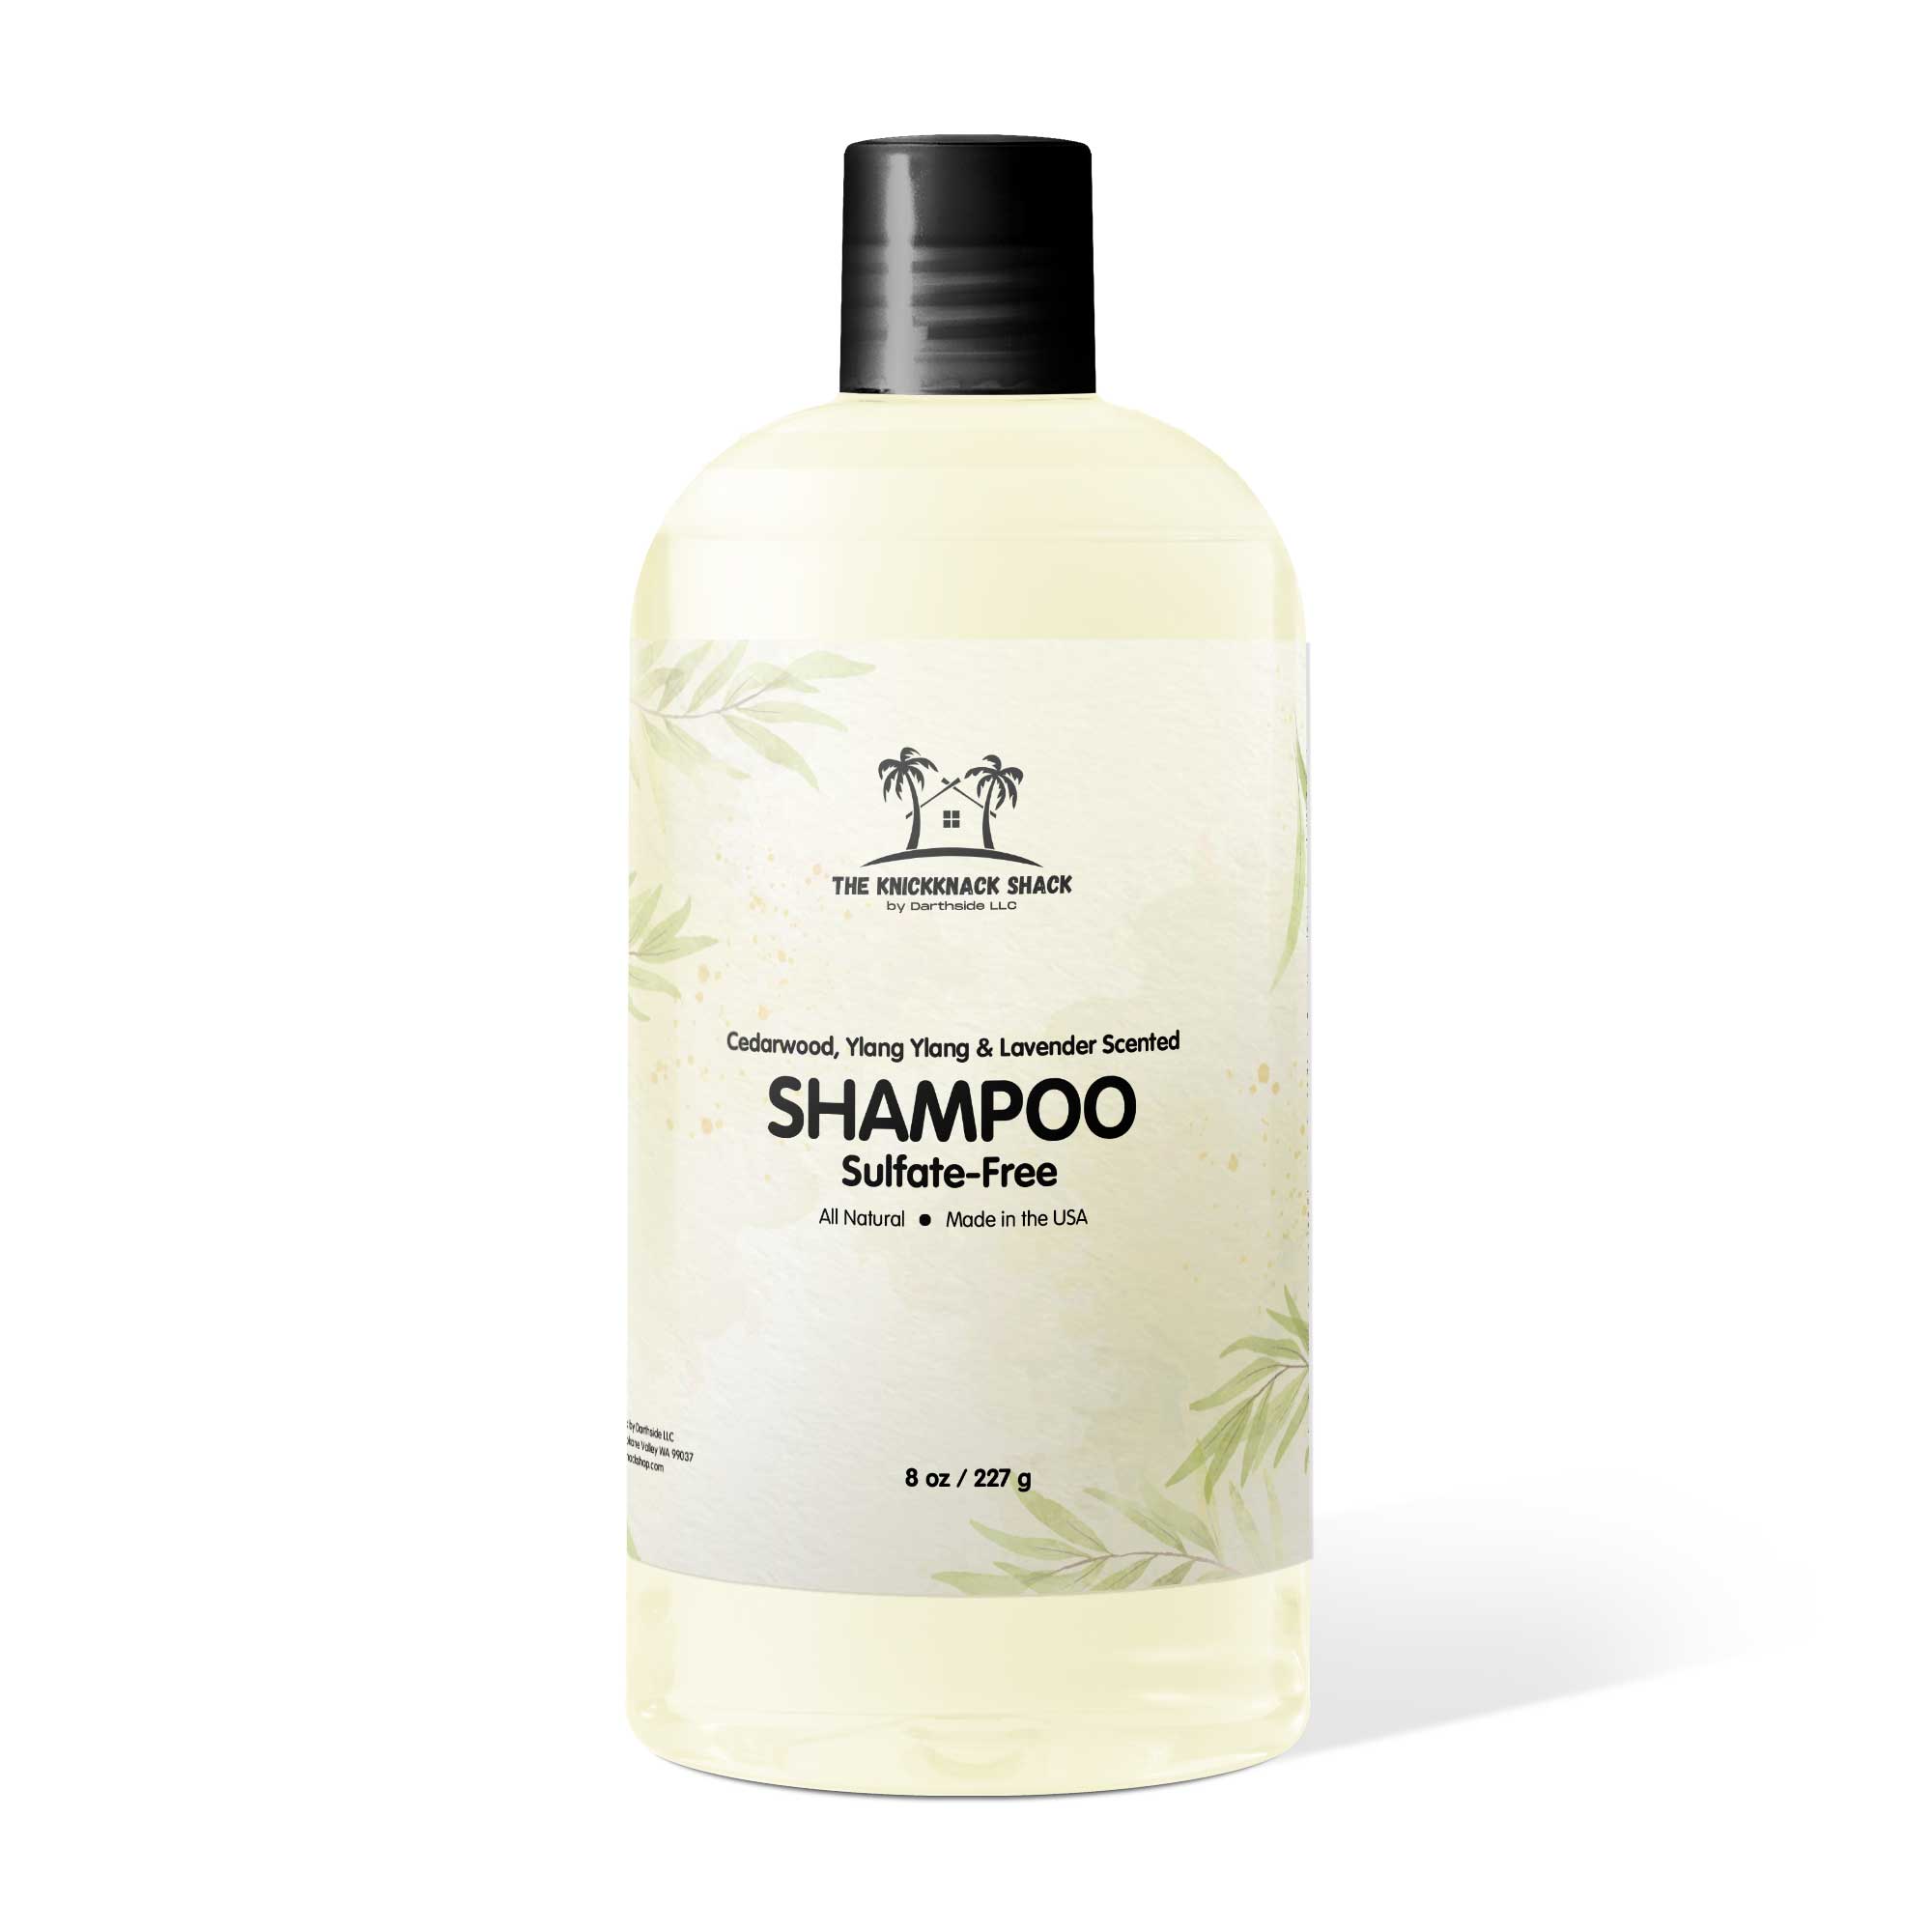 Cedarwood, Ylang Ylang & Lavender Scented Sulfate-Free Shampoo